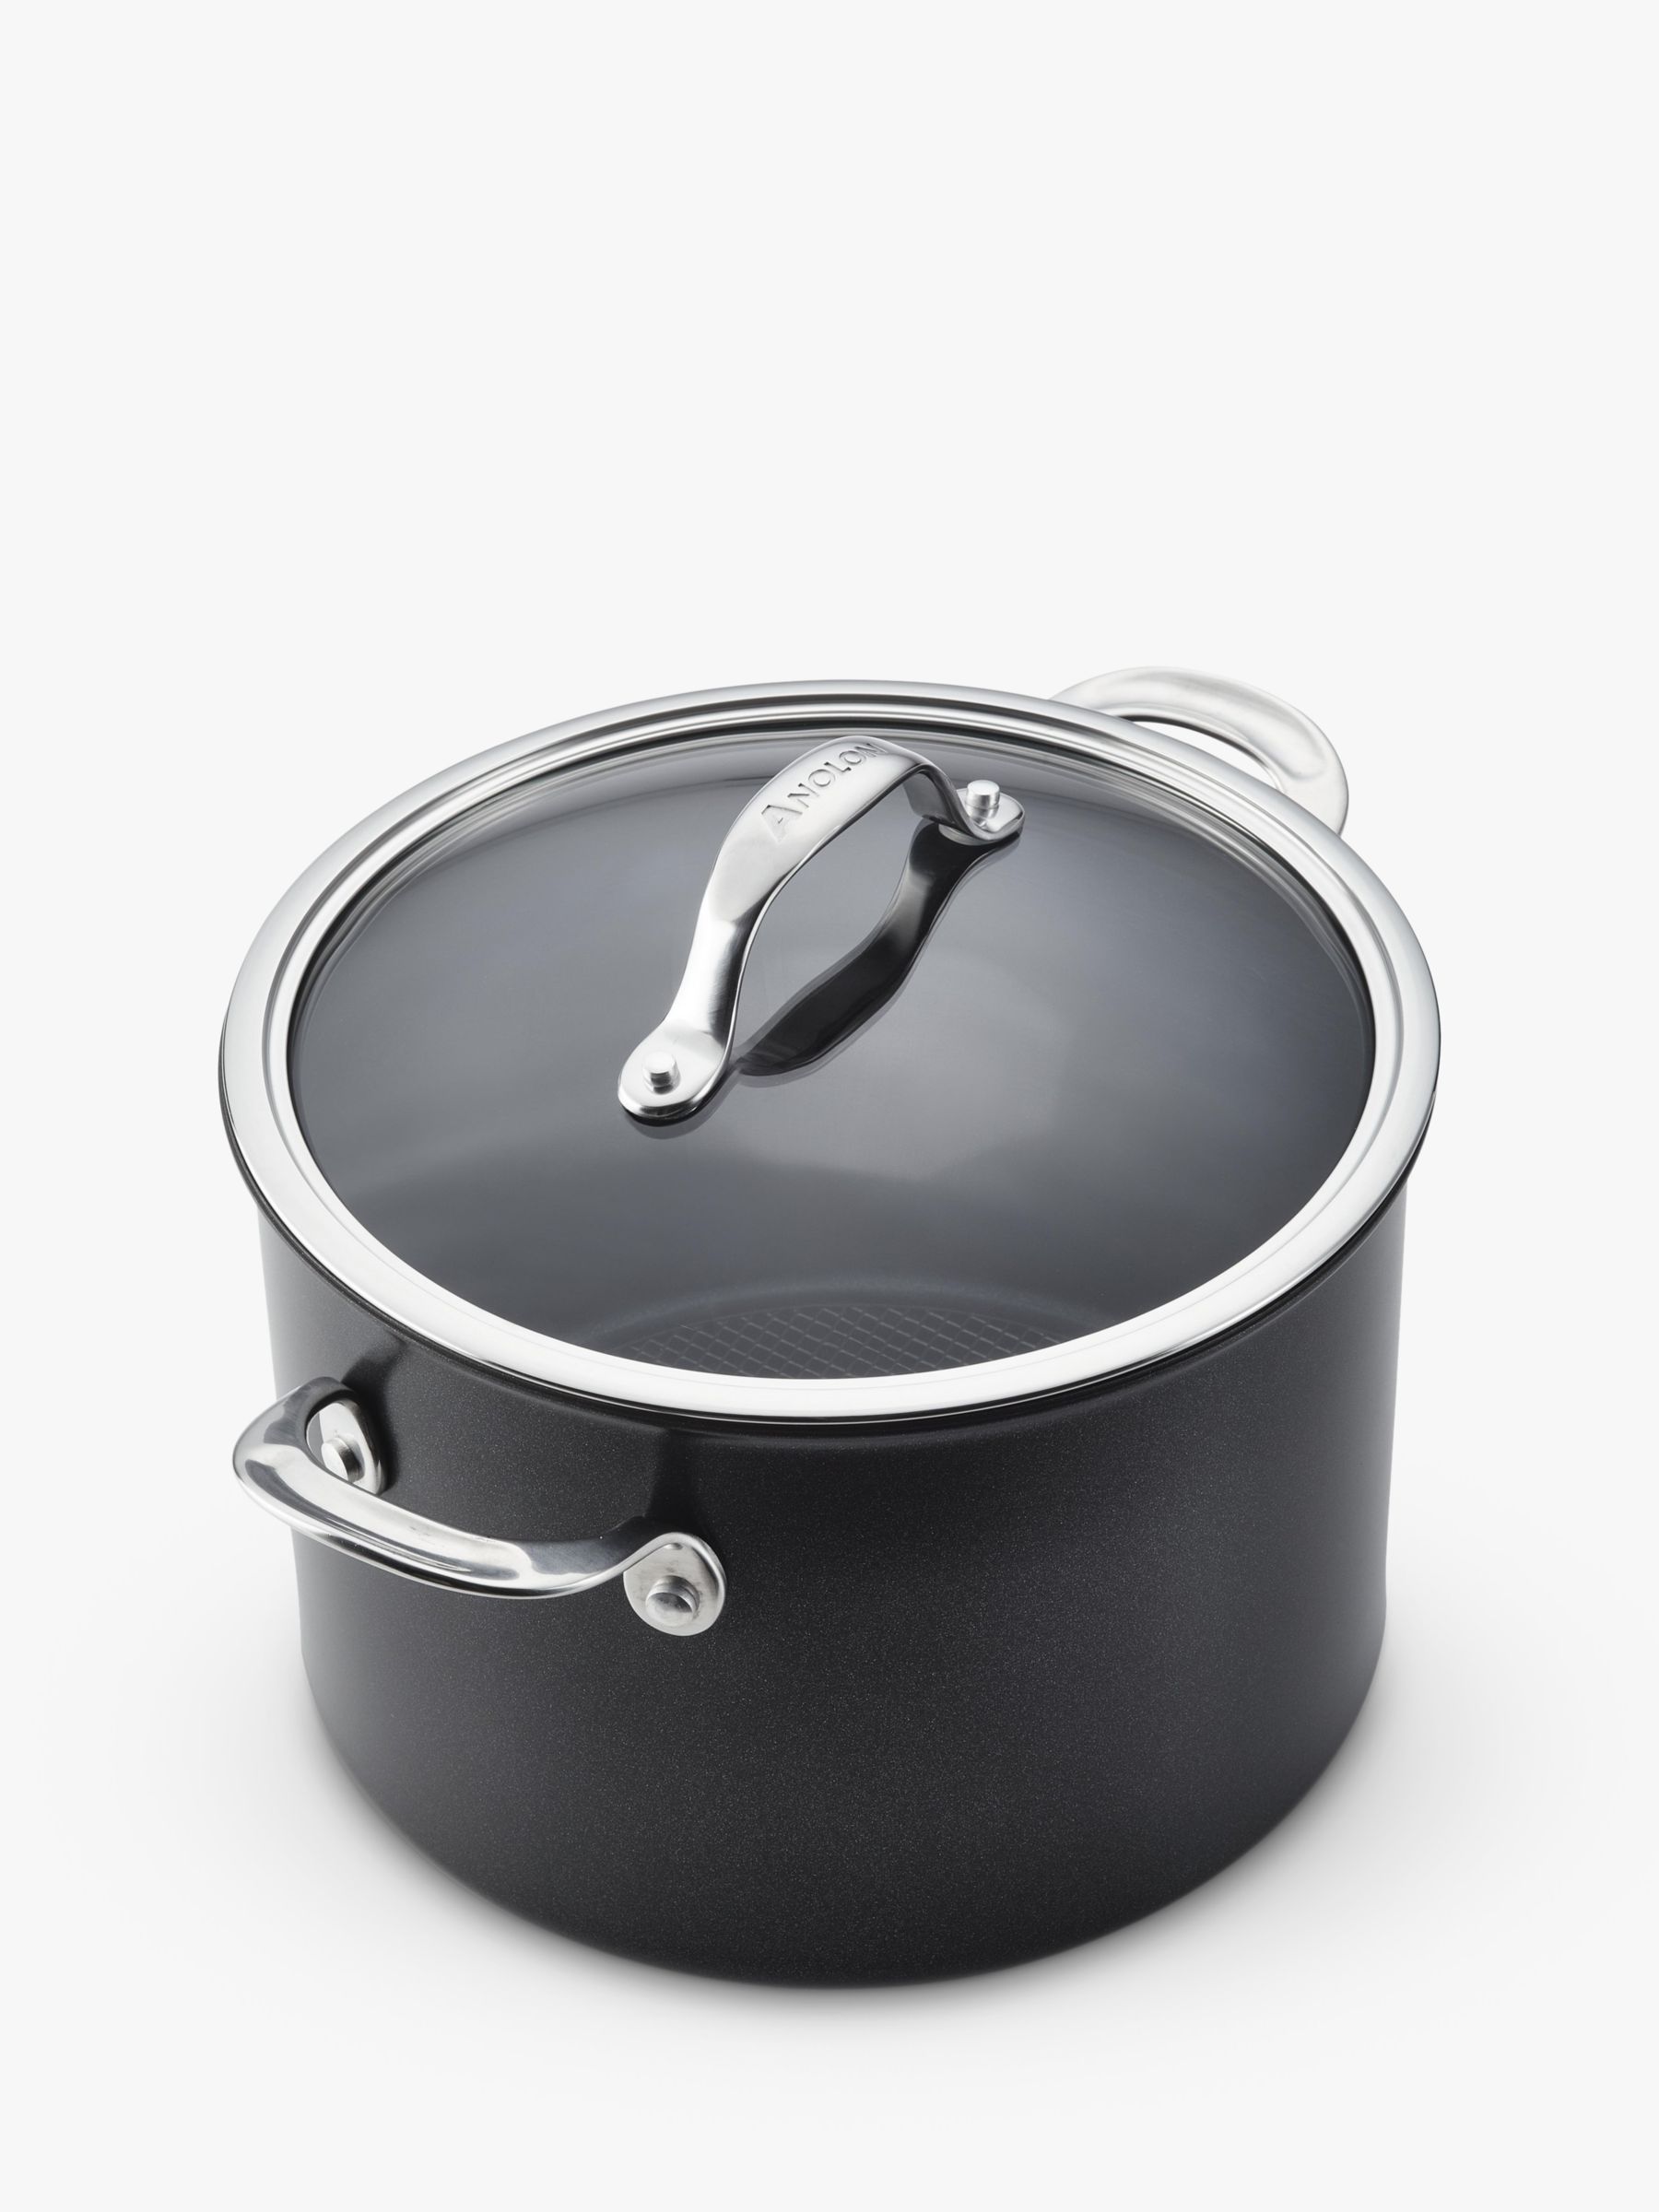 Anolon x Hybrid Nonstick Cookware Induction / Pots and Pans Set, 10 Piece - Dark Gray